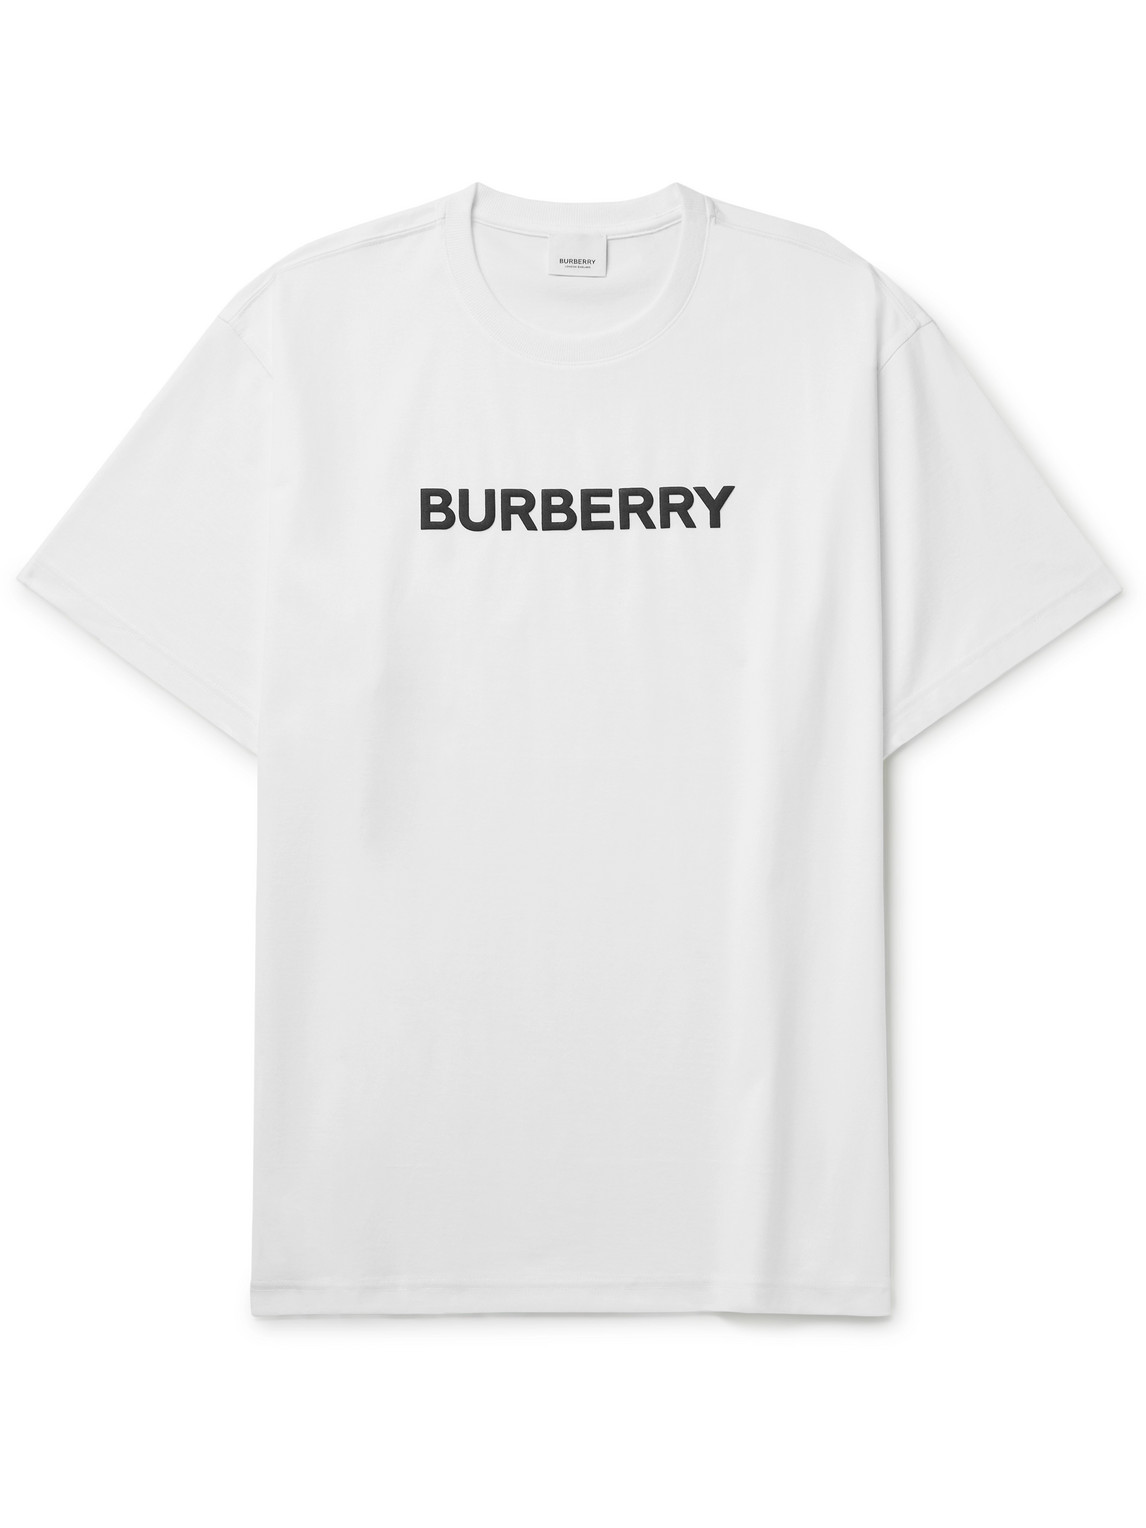 Burberry - Logo-Print Cotton-Jersey T-Shirt - Men - White - XXL von Burberry